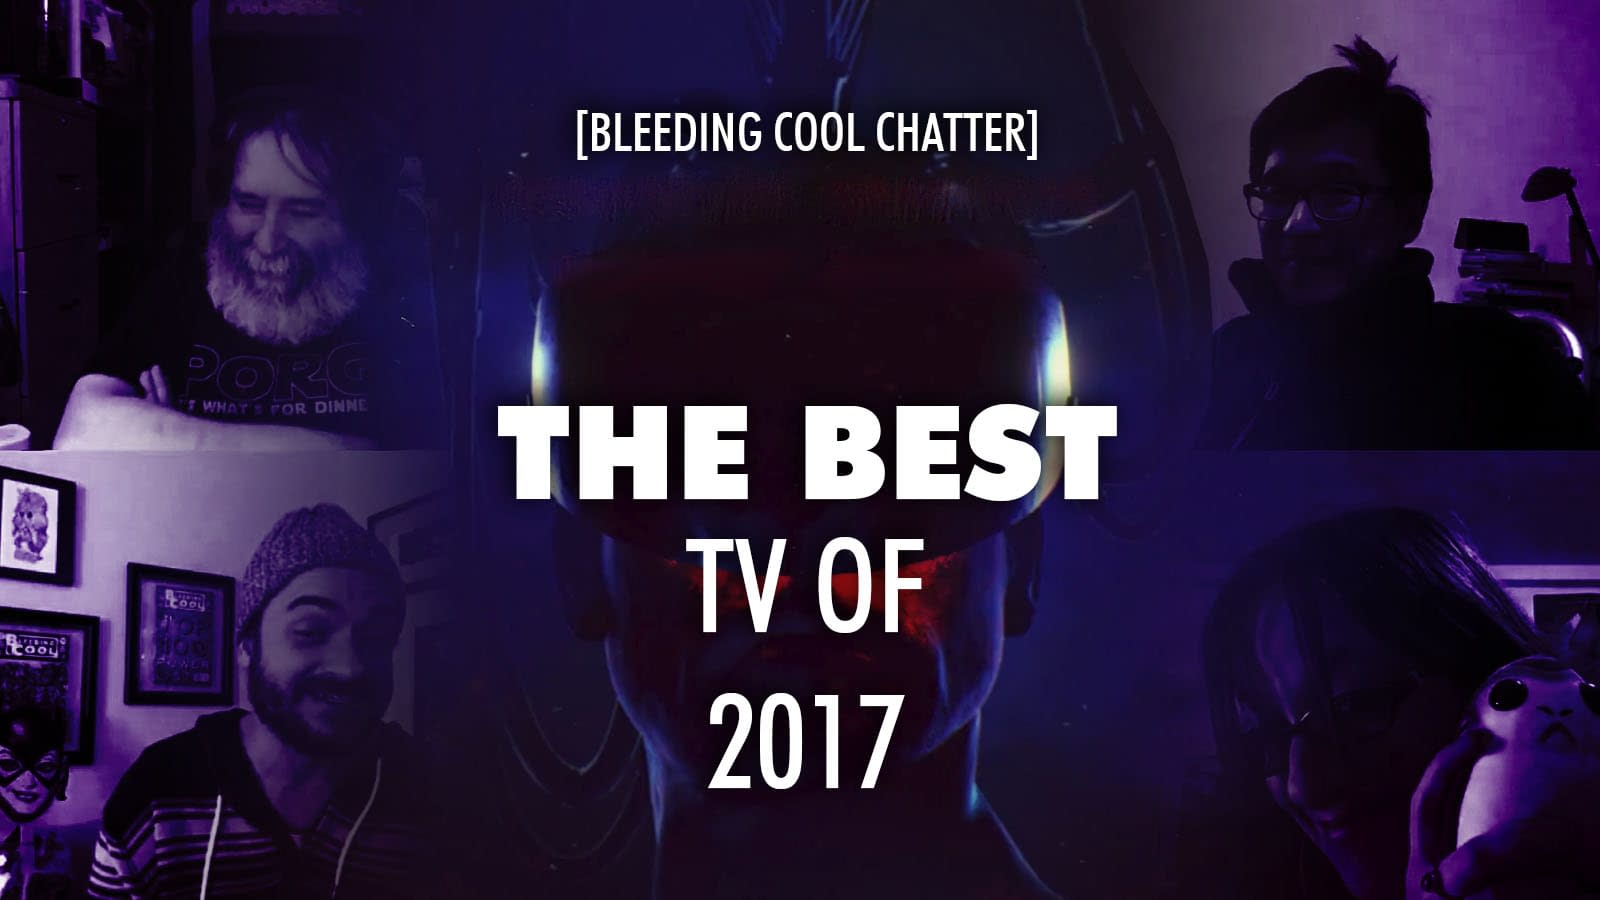 Bleeding Cool Chatter #11: The Best TV of 2017